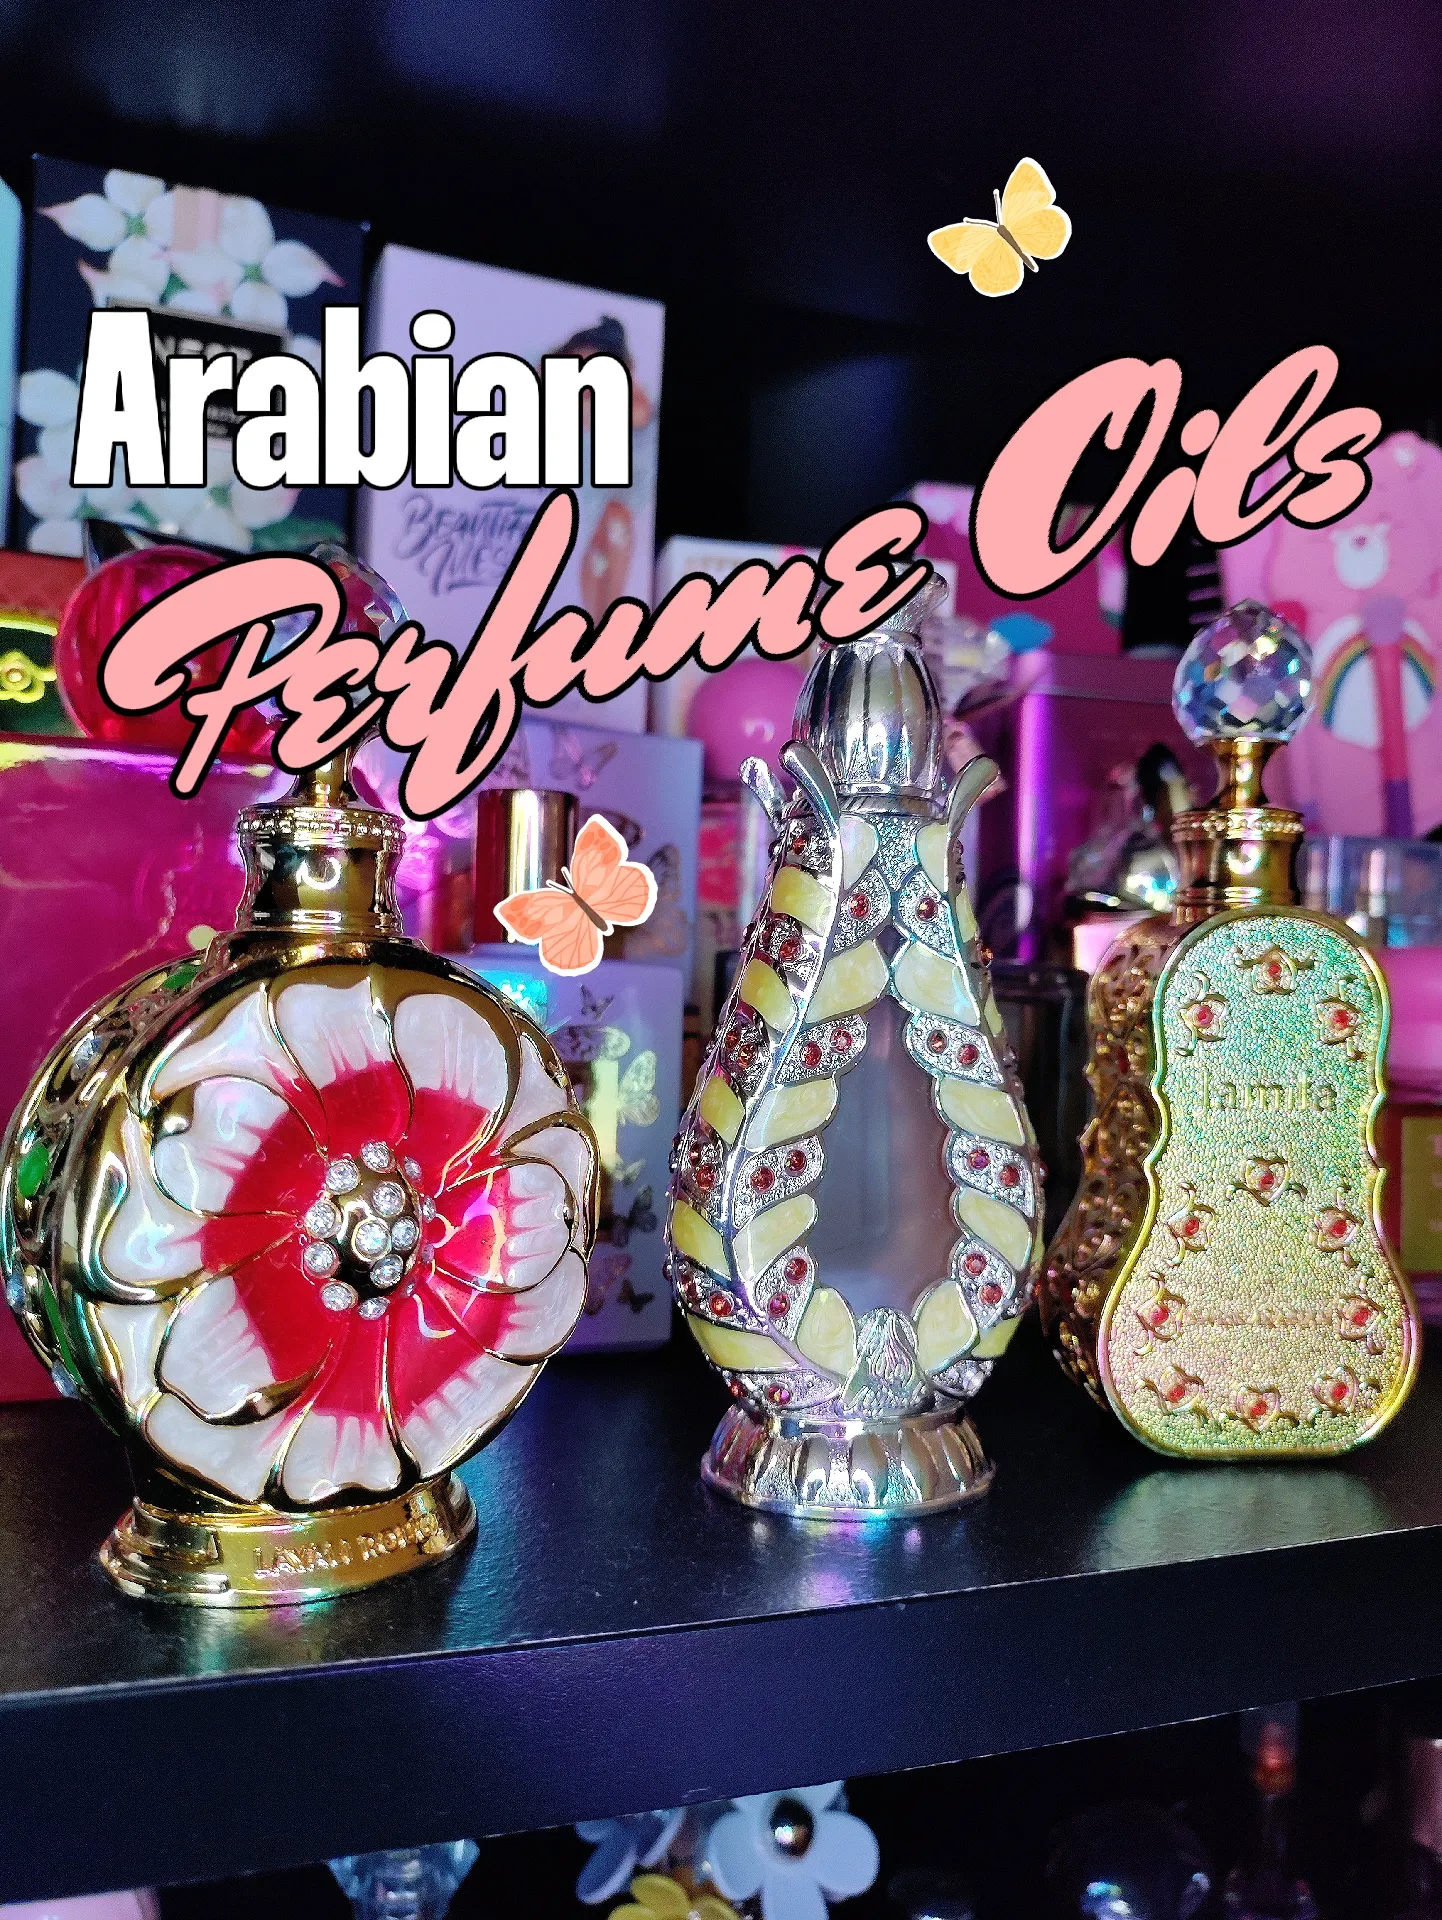 fantastic arab perfume｜TikTok Search